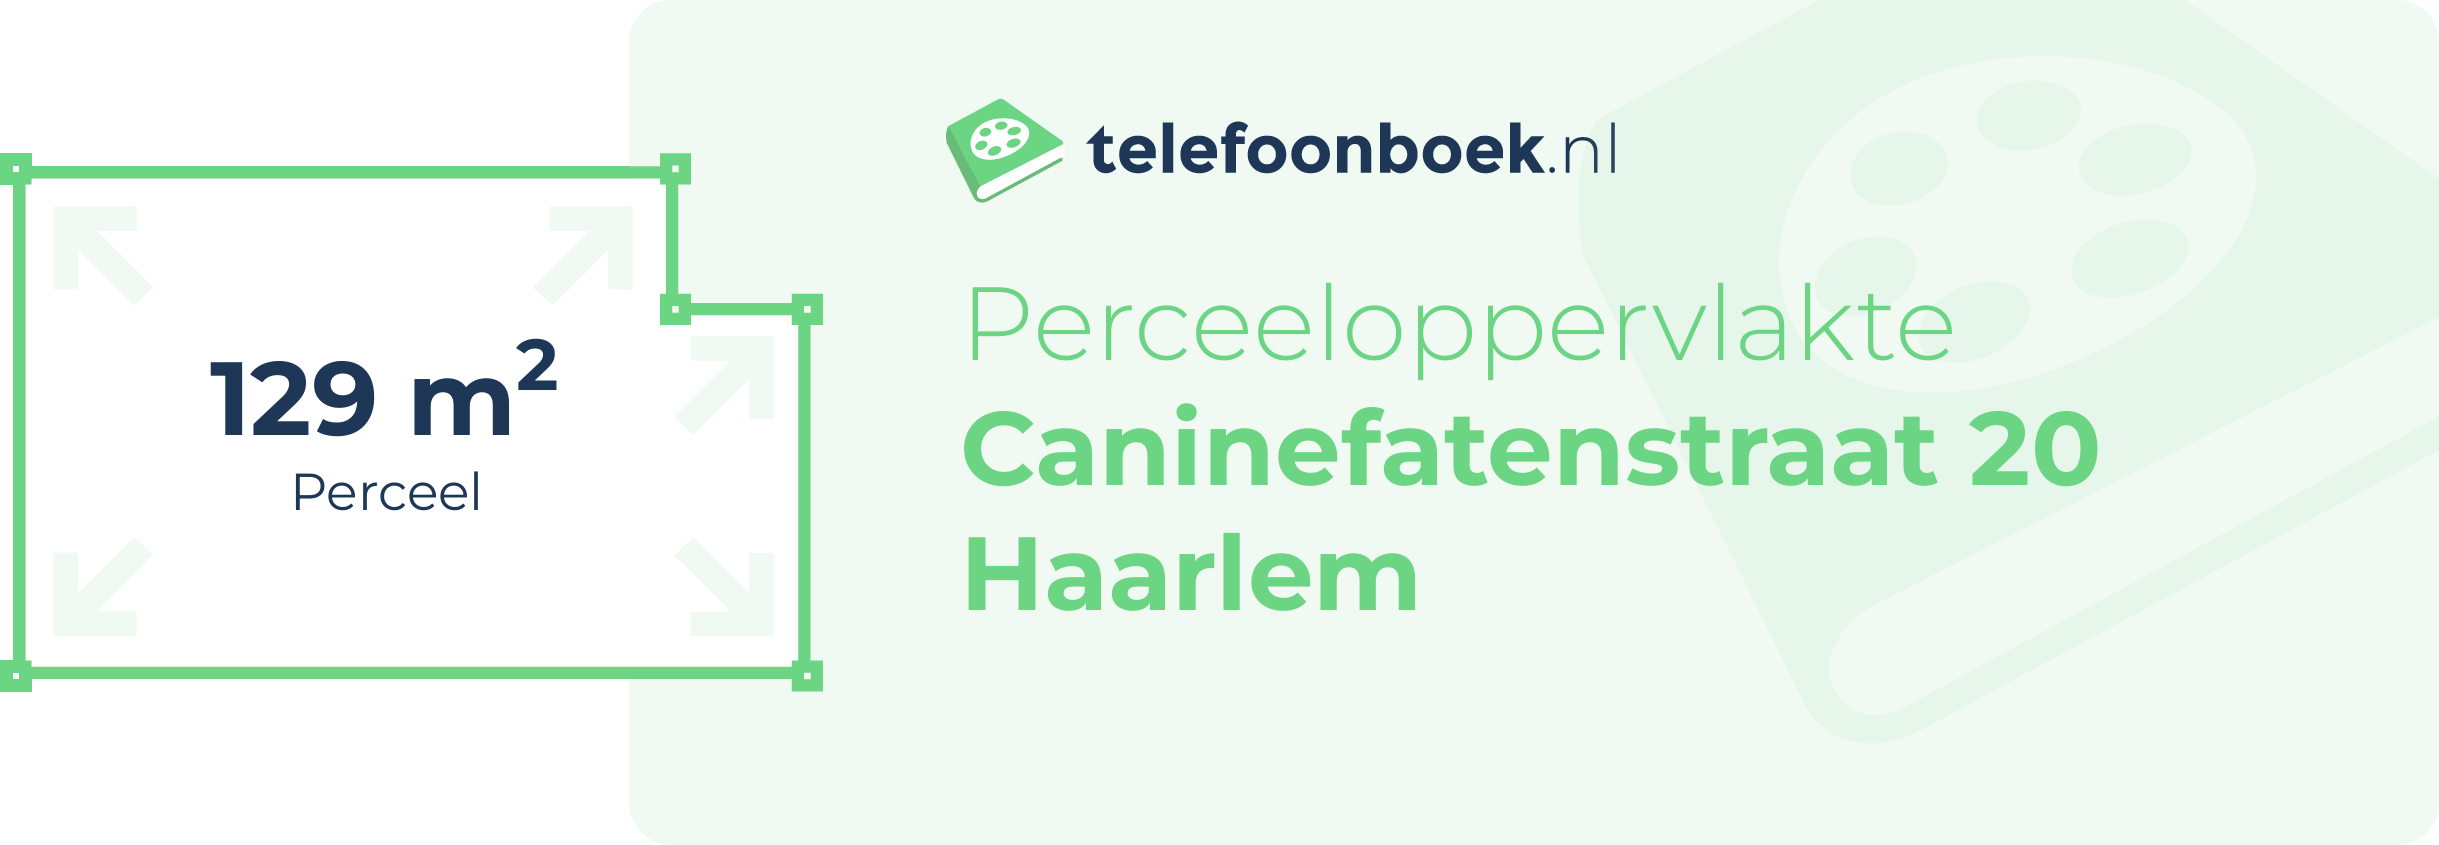 Perceeloppervlakte Caninefatenstraat 20 Haarlem